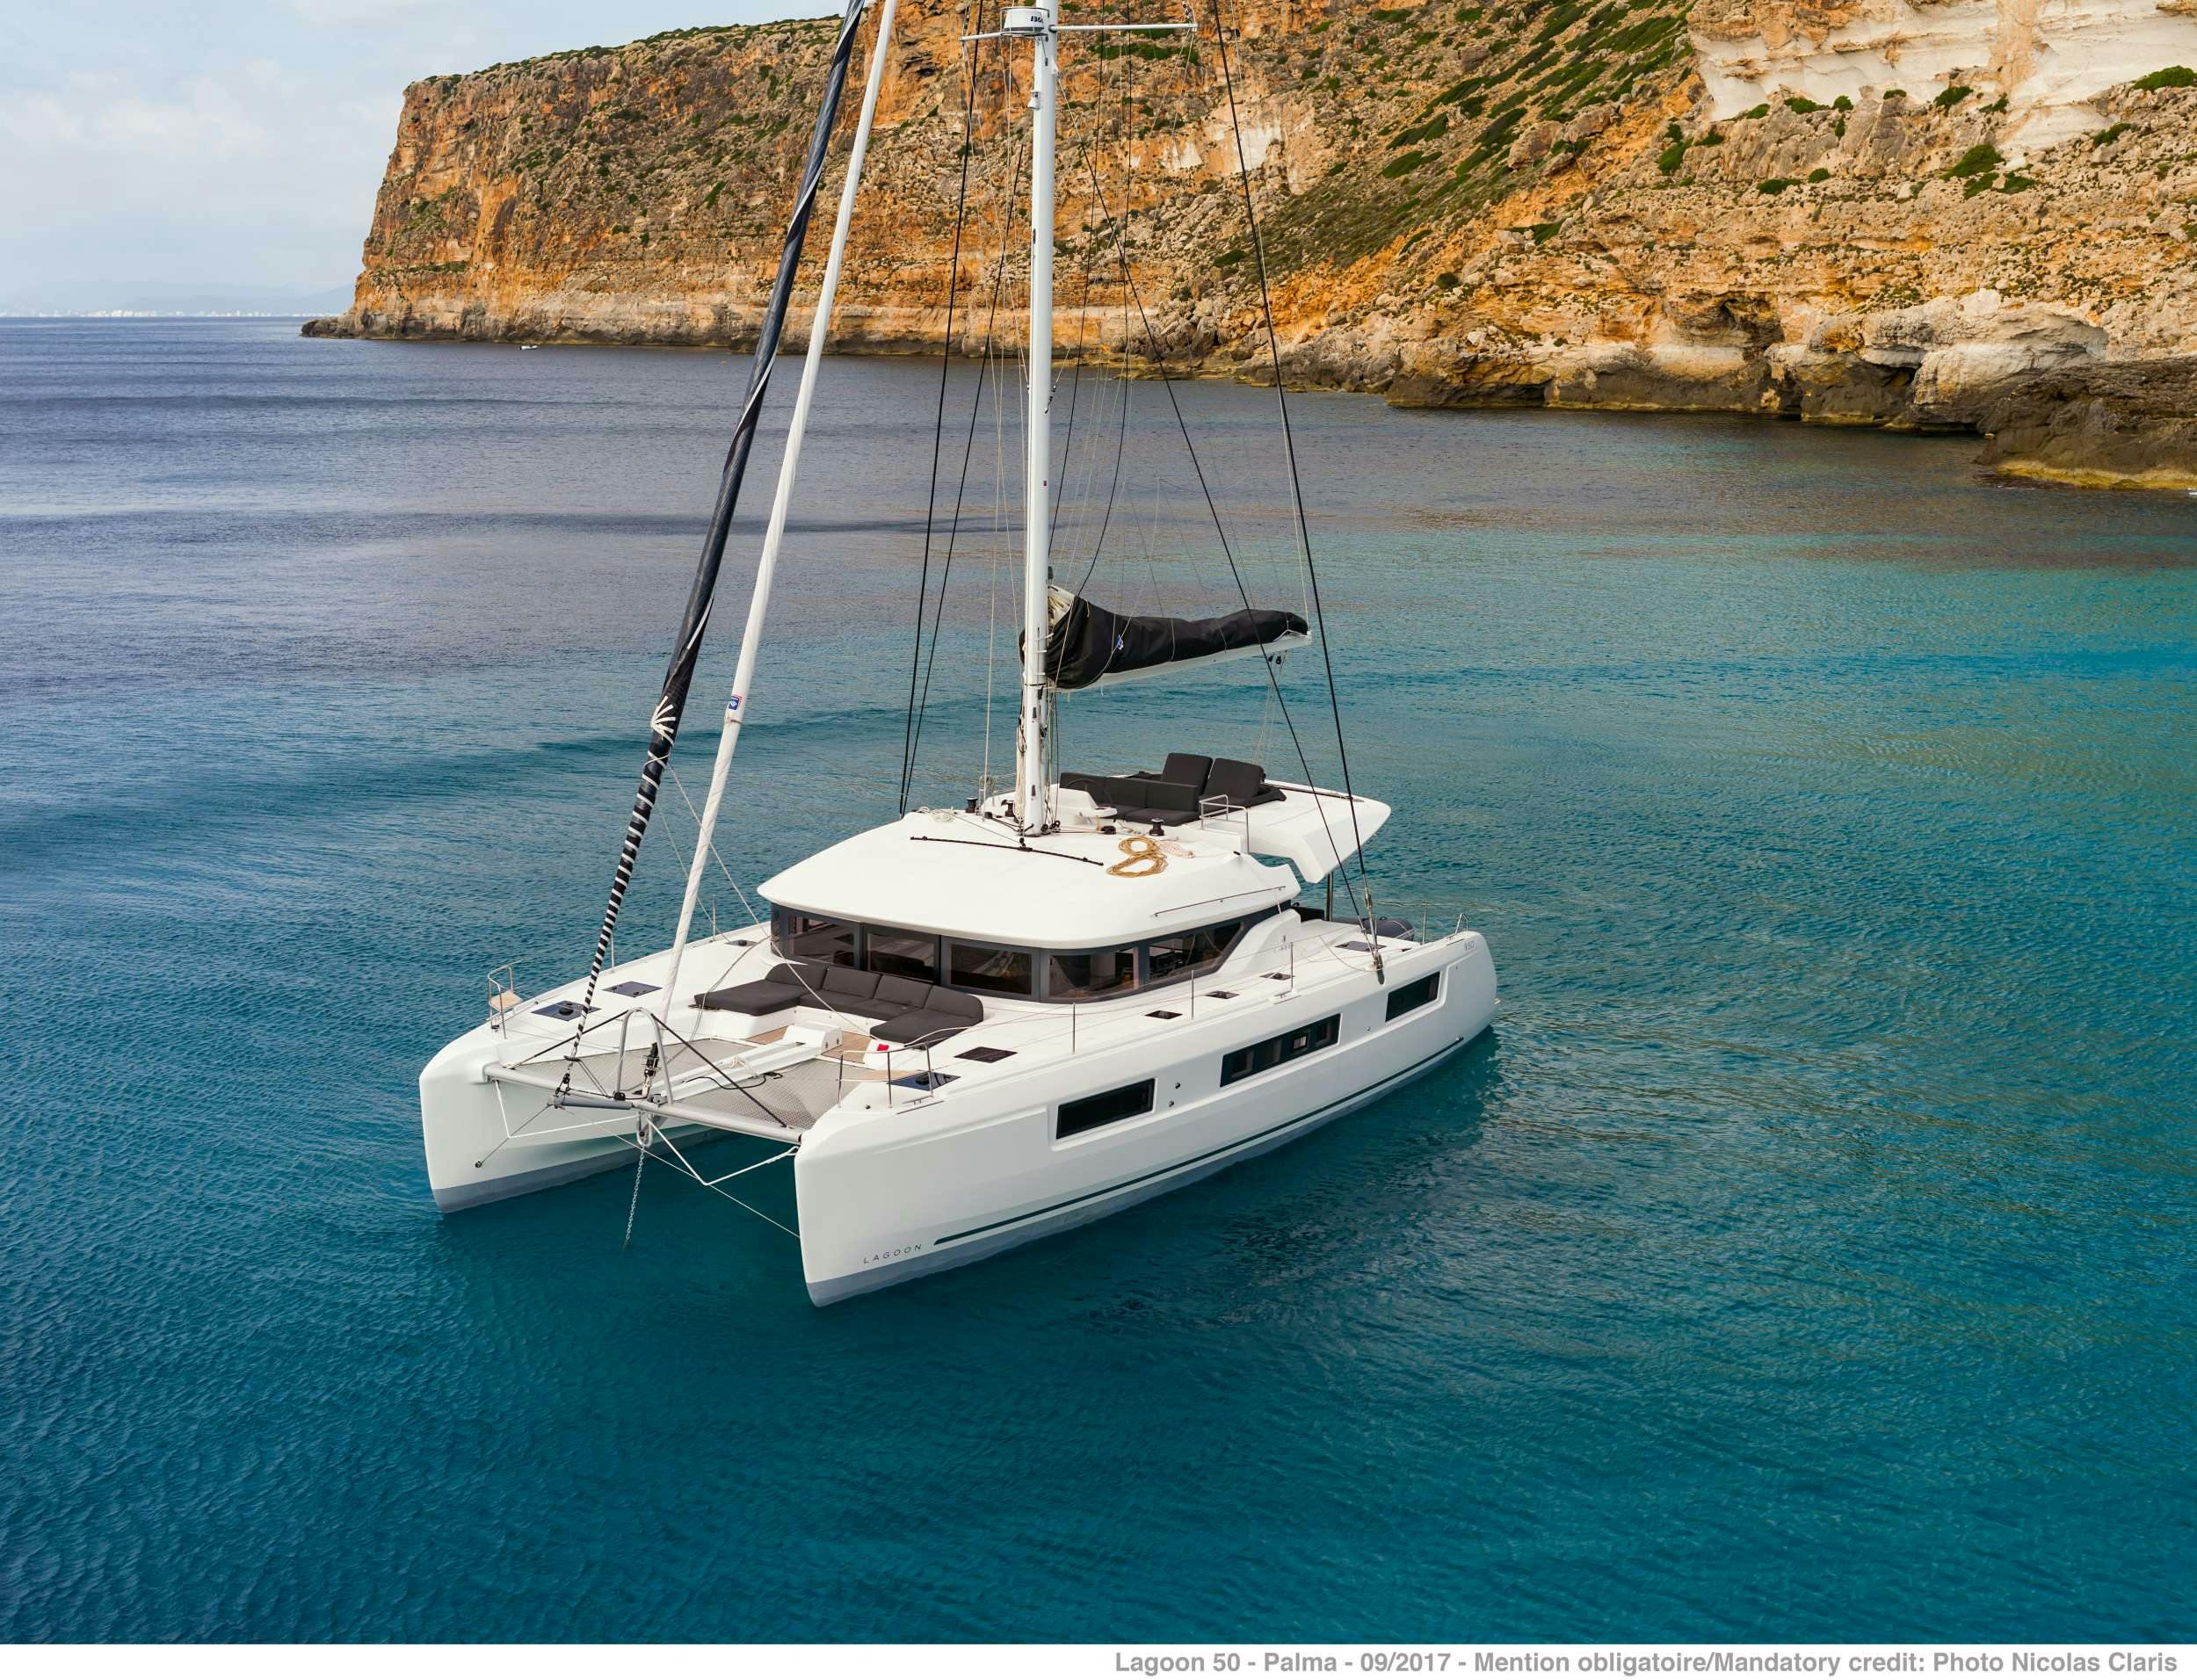 ONEIDA 2 - Yacht Charter Corinth & Boat hire in Greece 1